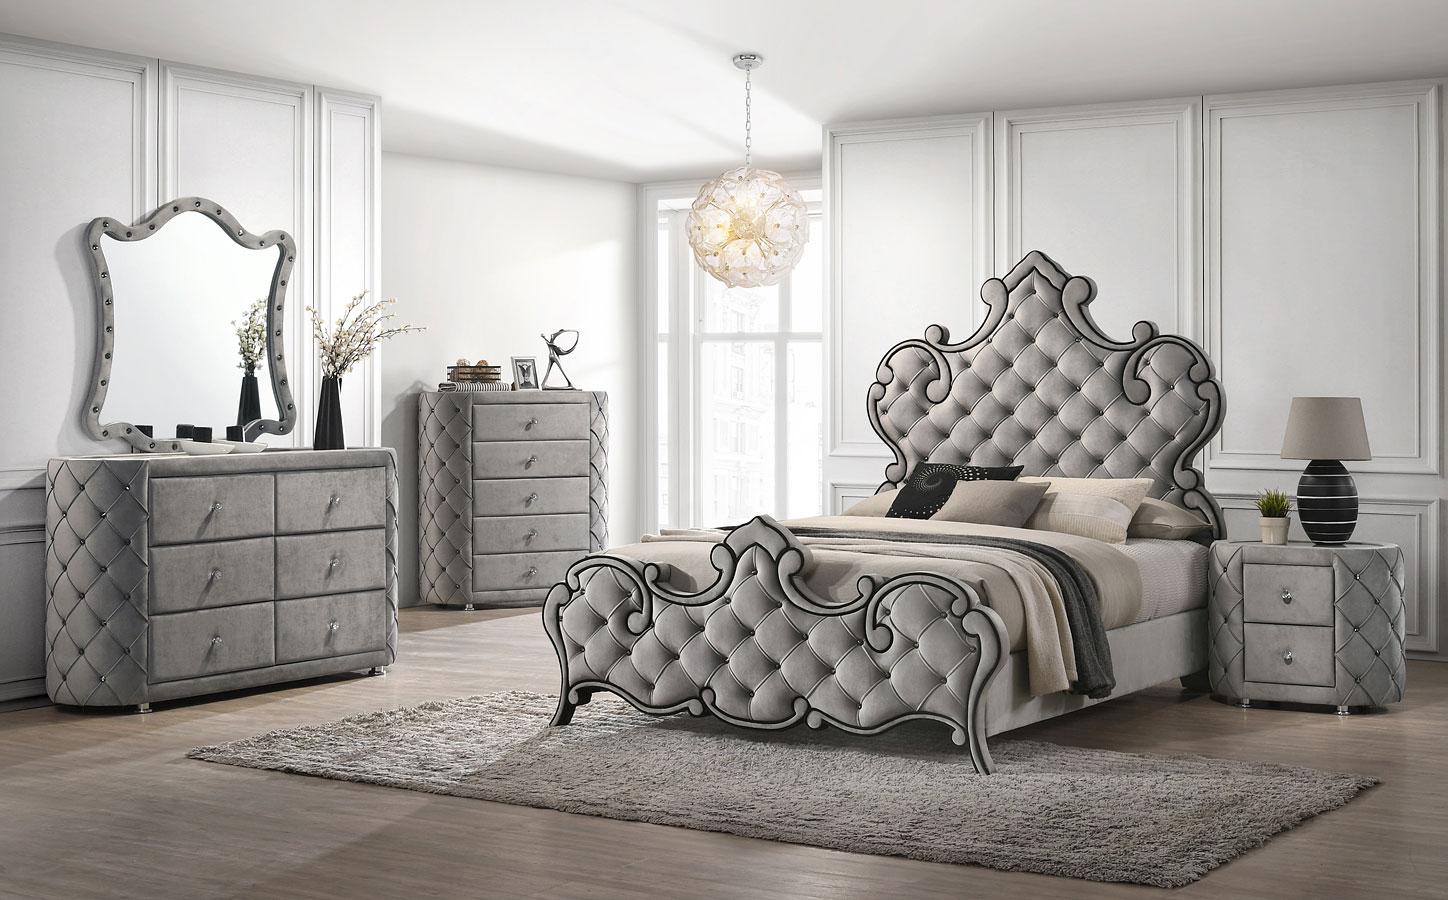 

    
BD01065-2pcs Gray Color Dresser + Mirror Set by Acme Furniture Perine BD01065-2pcs
